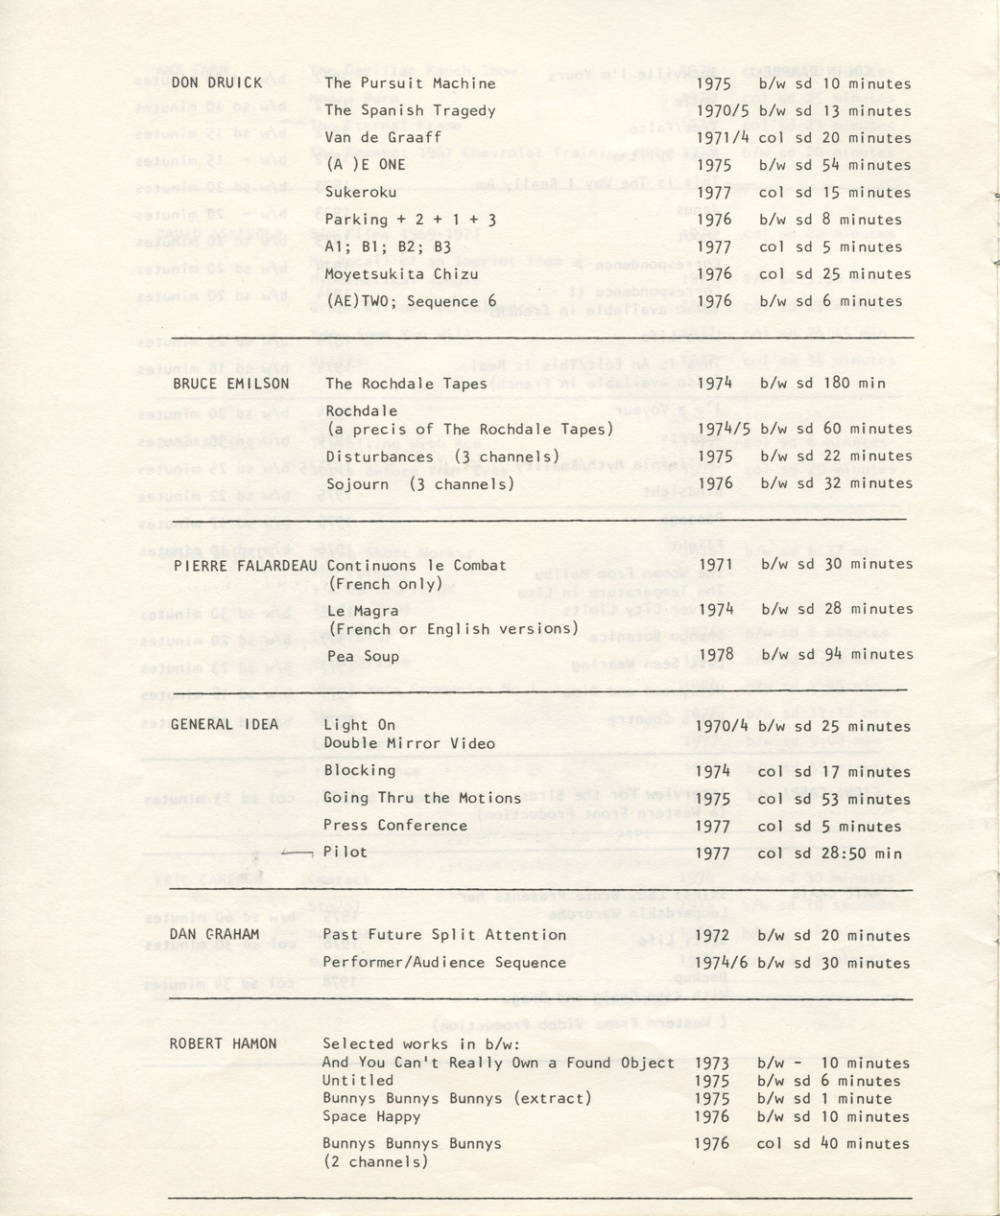 Video by Artists Checklist June 1978. Newsletter. 